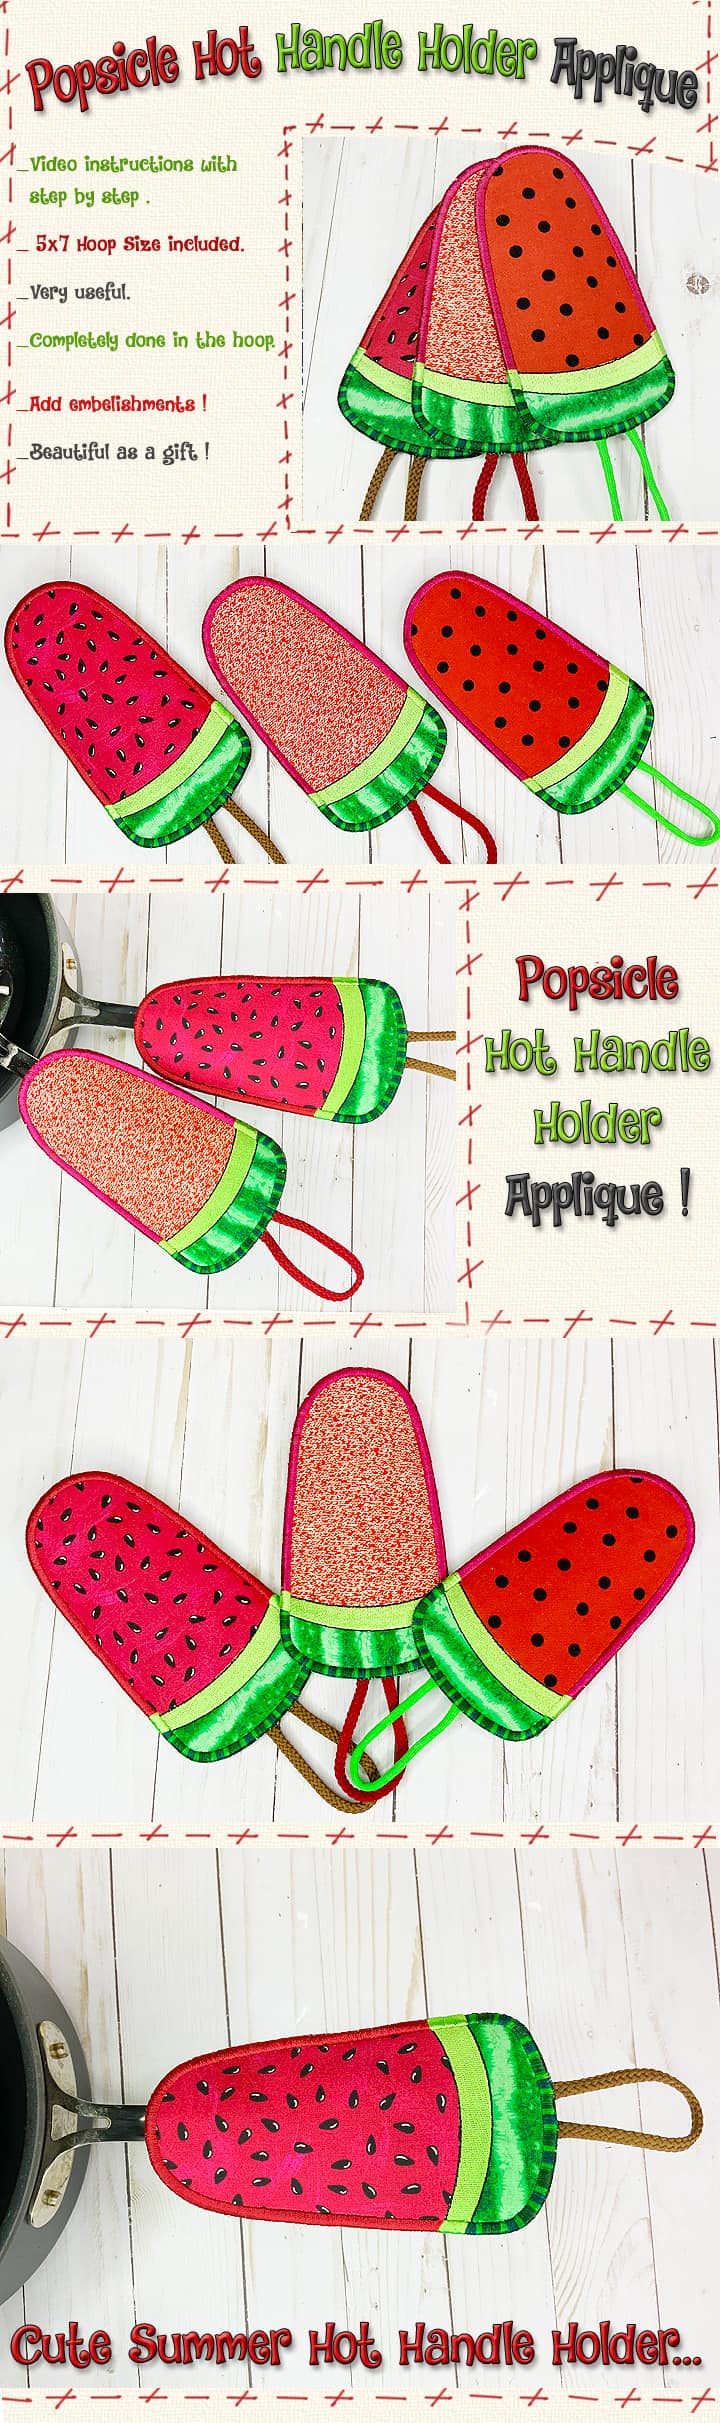 Popsicle Hot Handle Holder Applique - Smart Needle